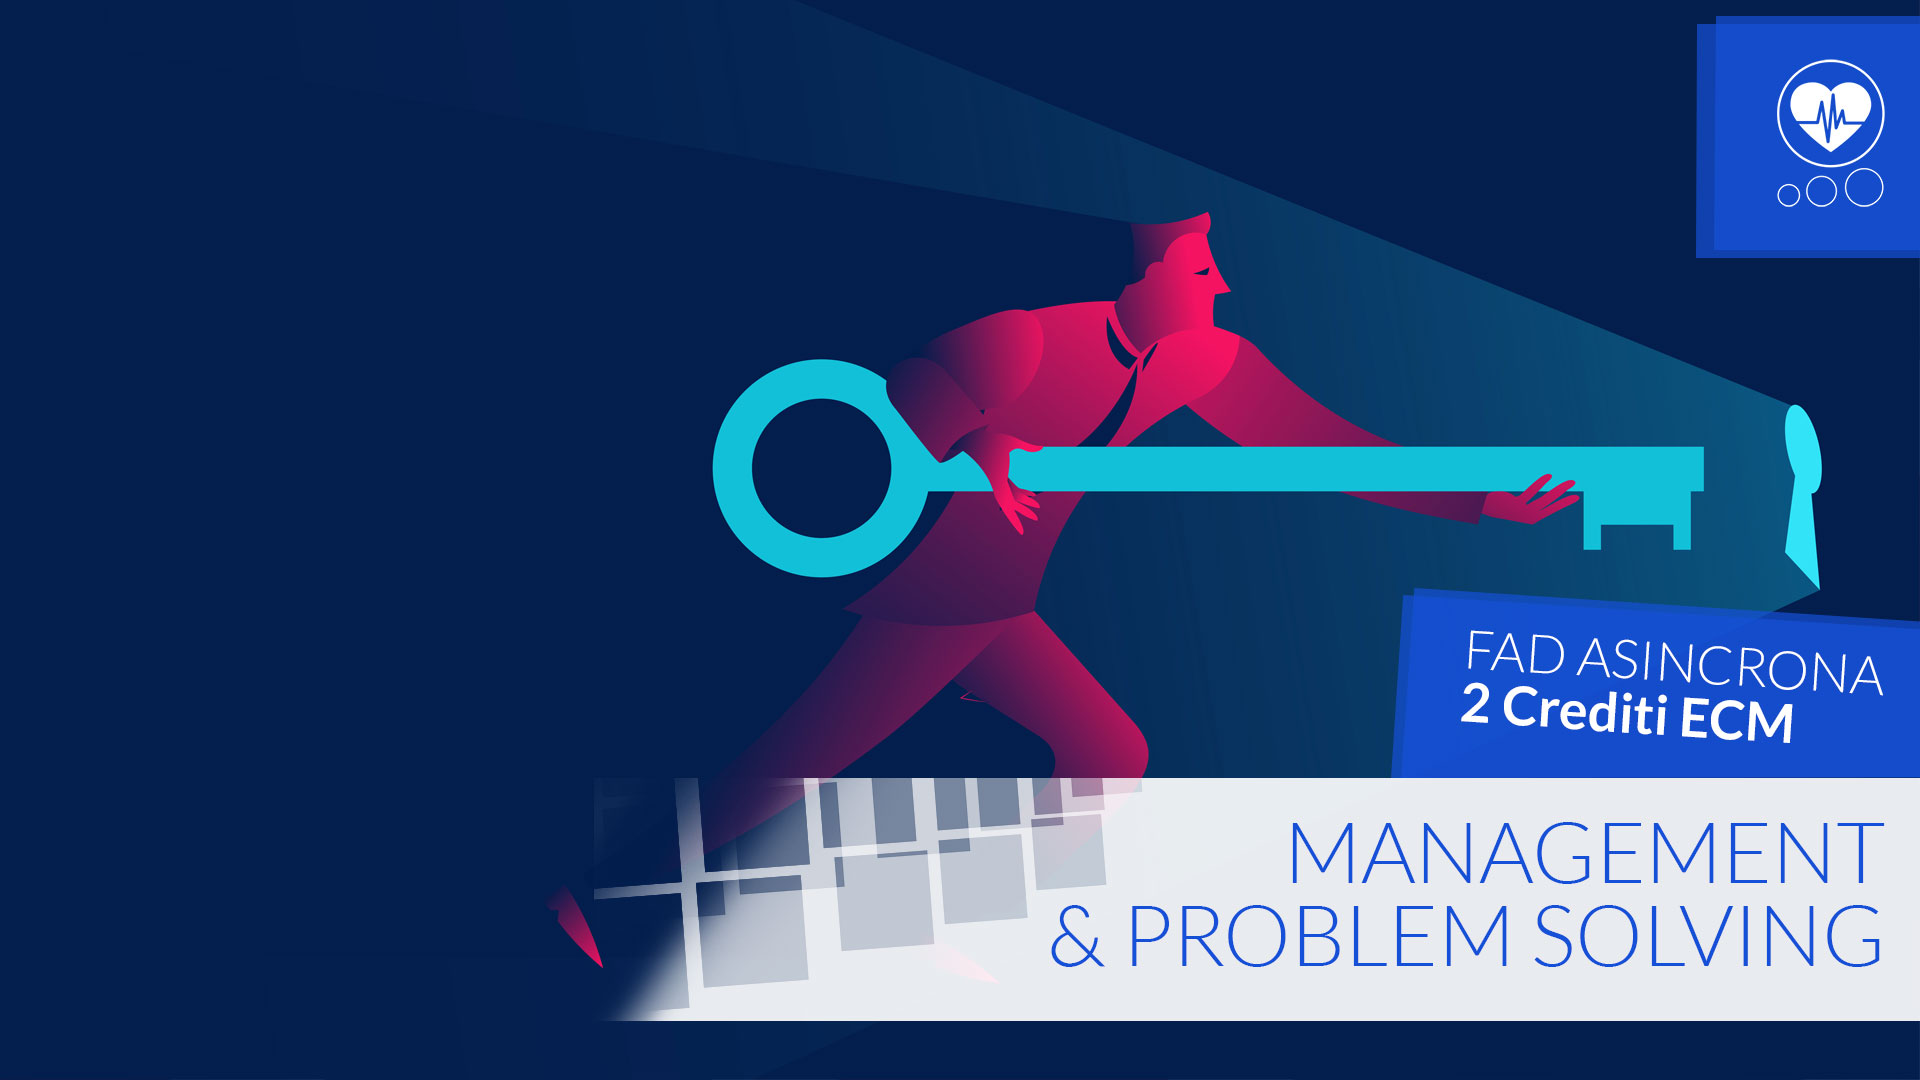 Management & Problem Solving